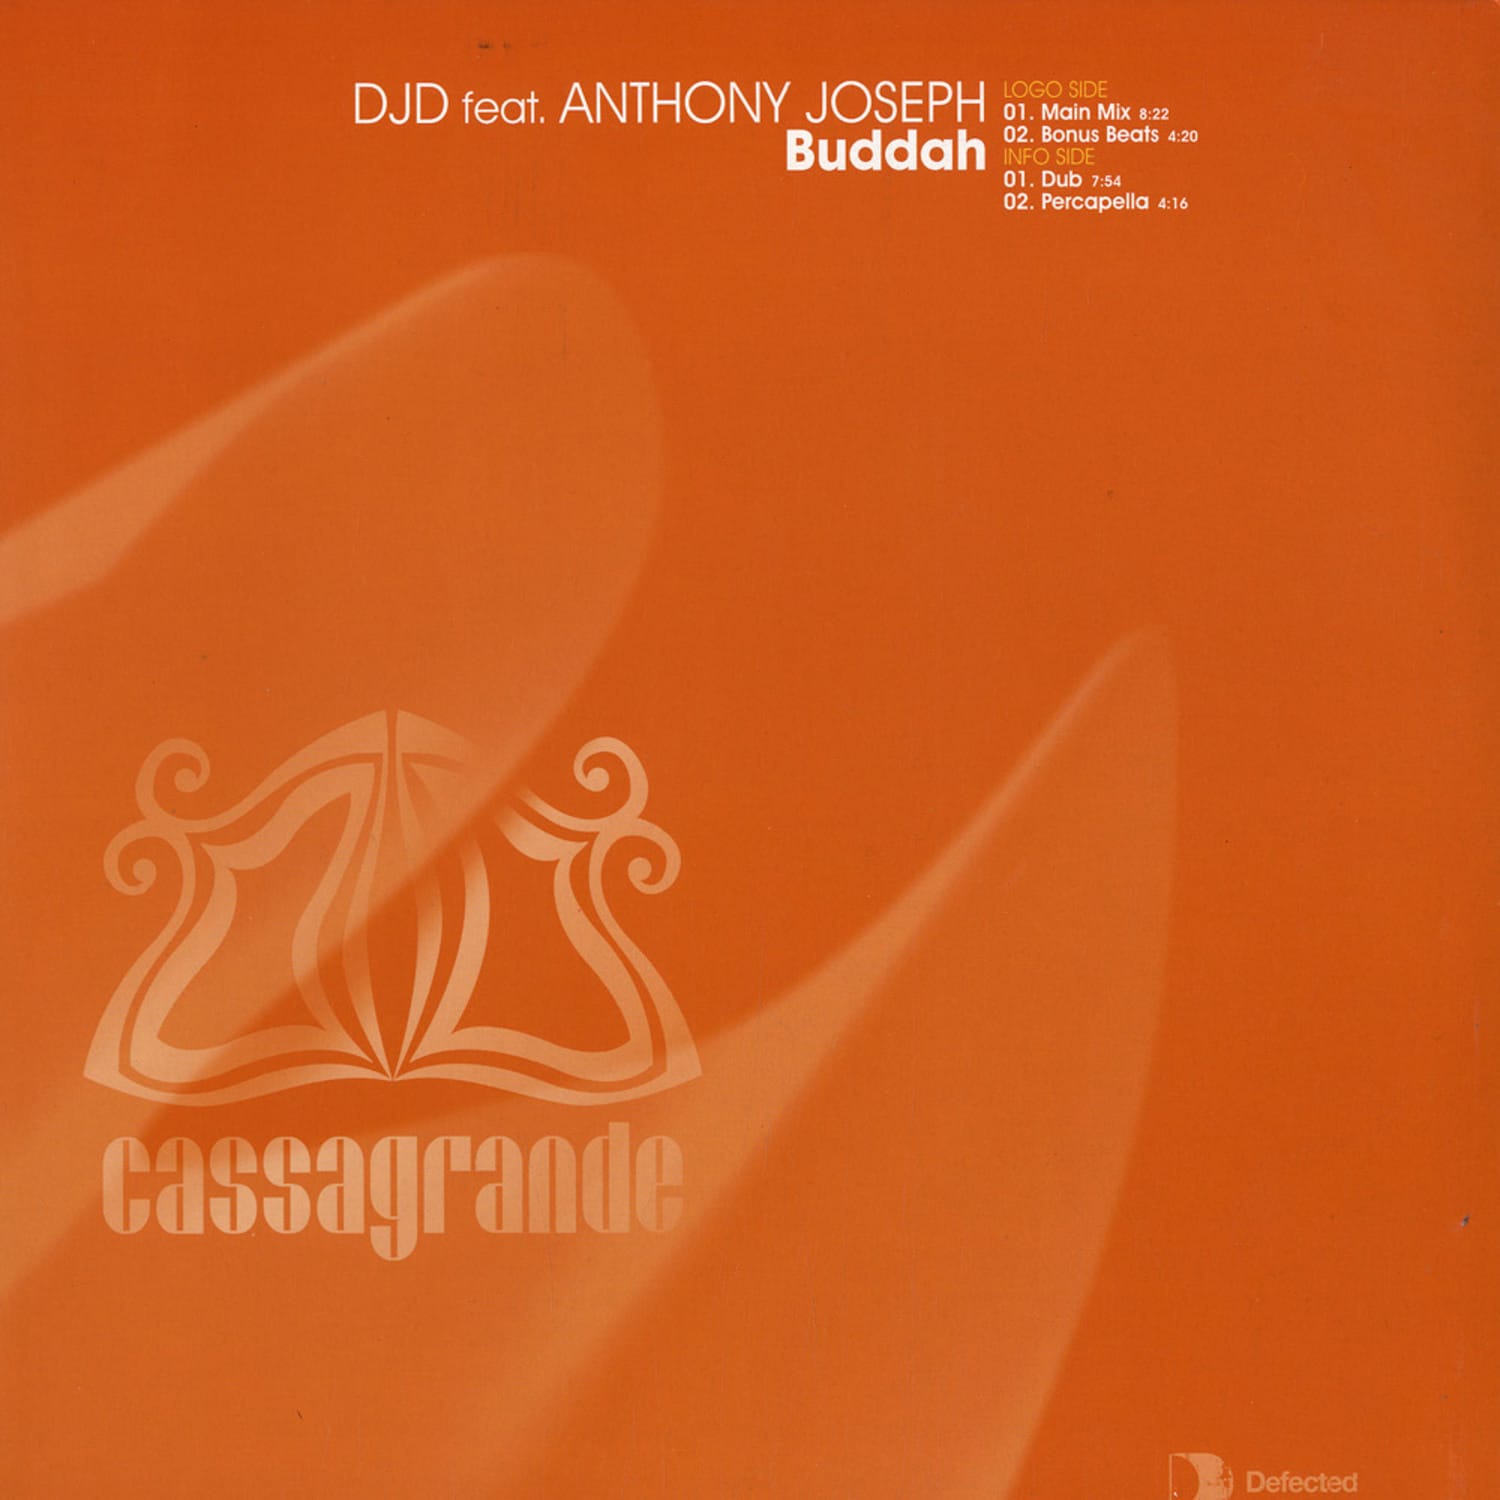 DJD feat. Antony Joseph - BUDDAH